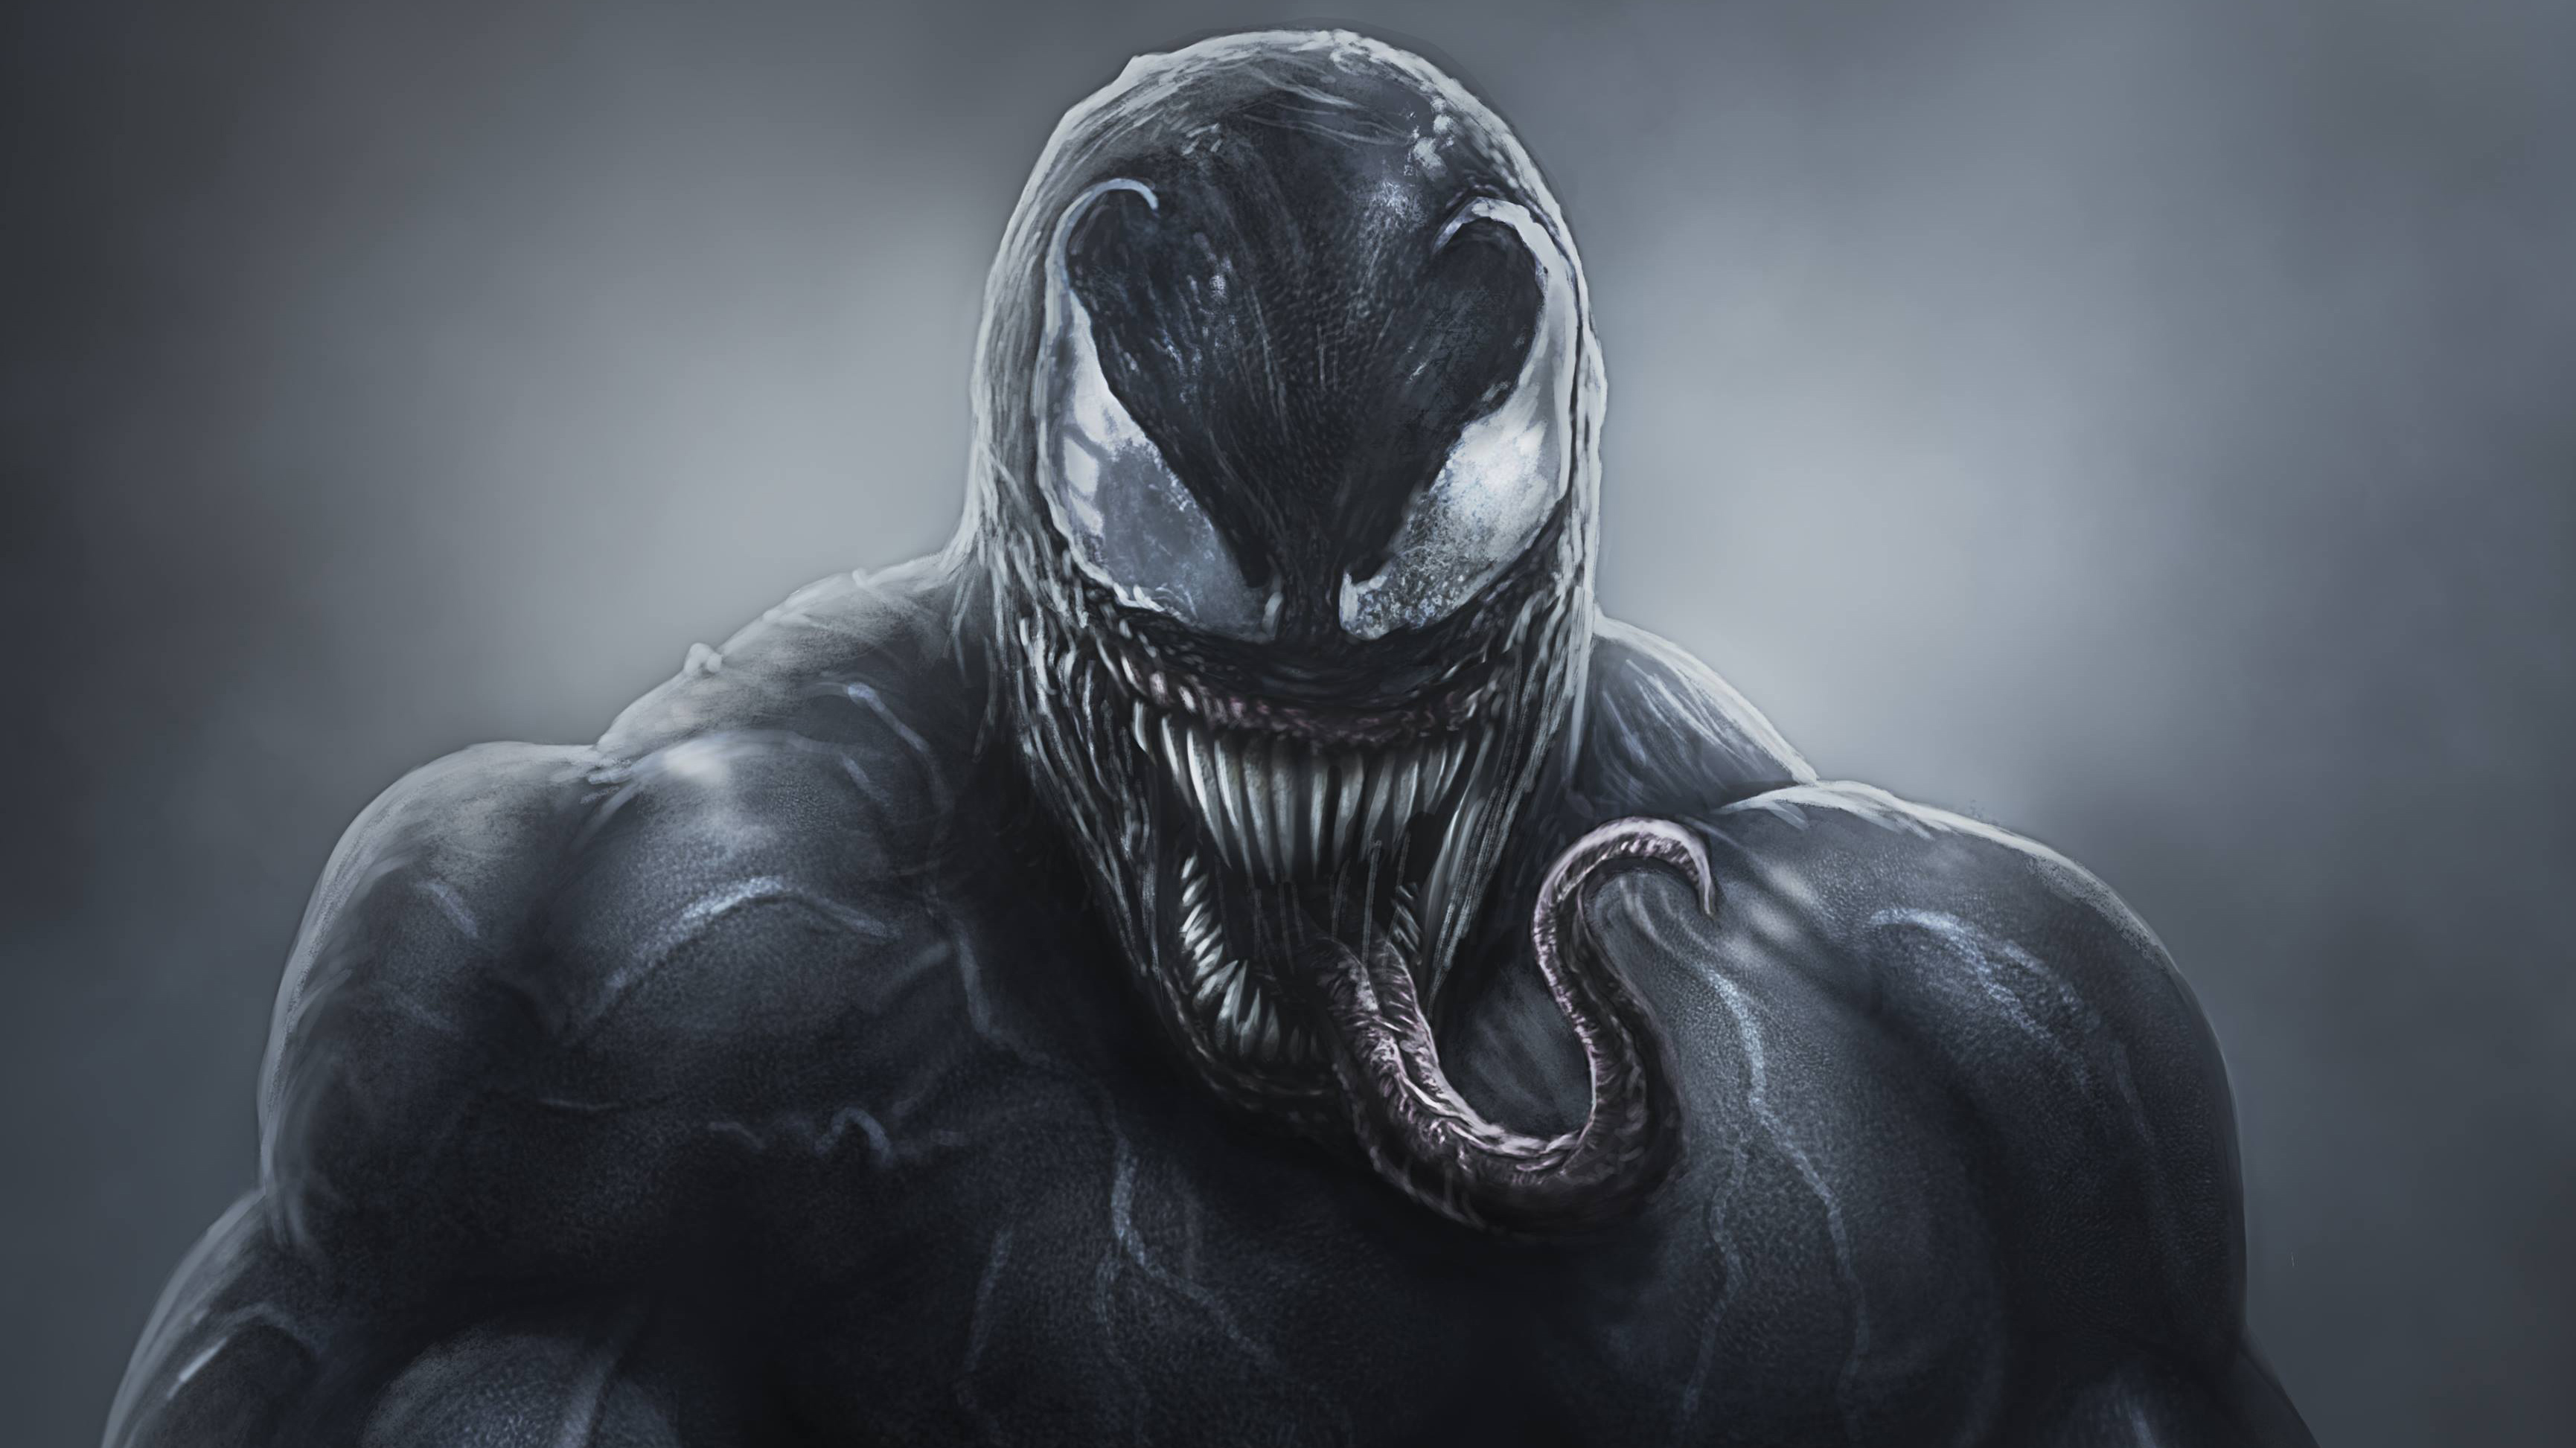 4k Venom Artwork 2018, HD Superheroes, 4k Wallpapers, Images